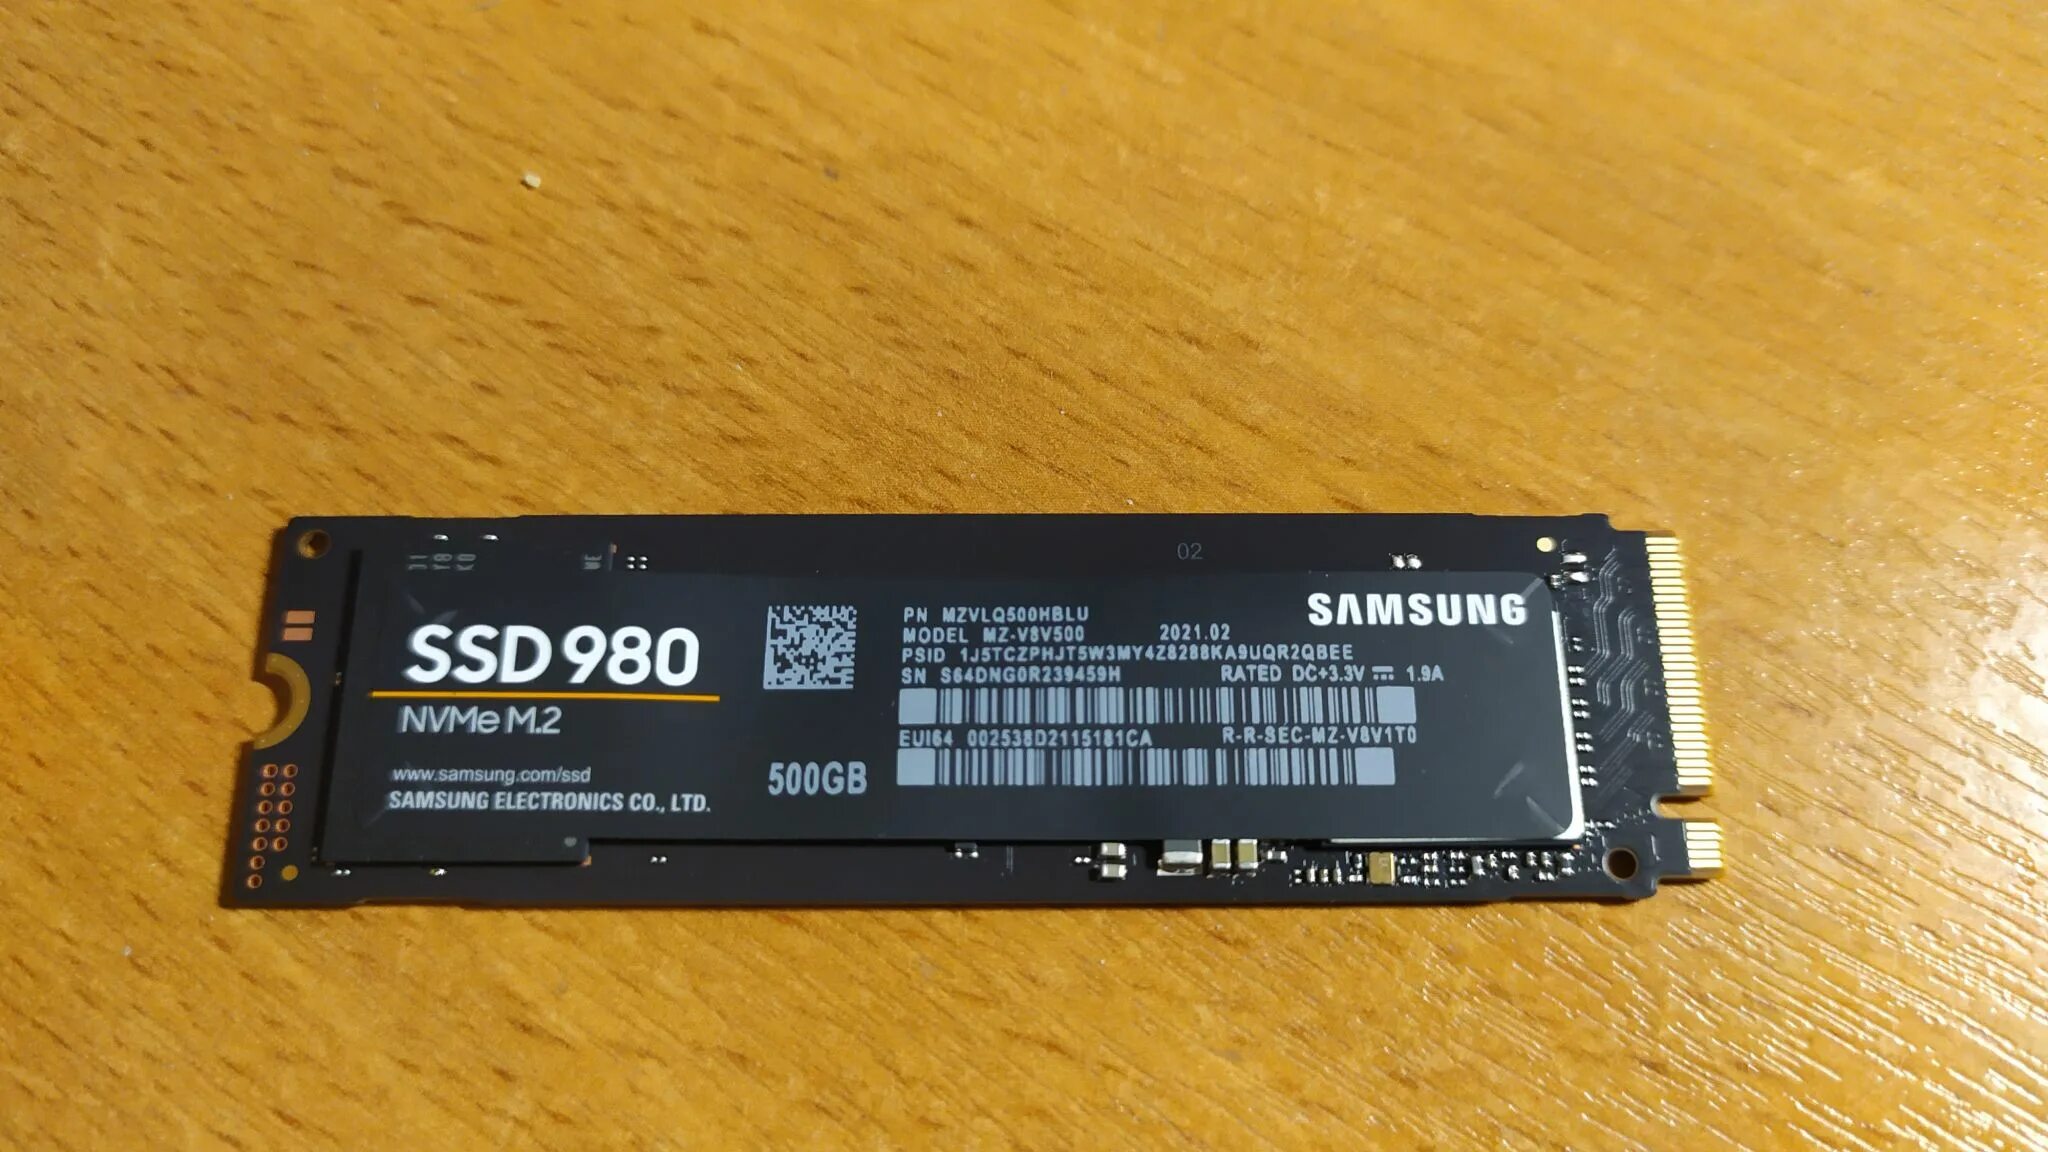 Ssd samsung 980 купить. SSD m2 Samsung 980. SSD Samsung 980 MZ v8v500bw. Samsung SSD 500gb 980 m.2 MZ-v8v500bw. M.2 накопитель Samsung 980.